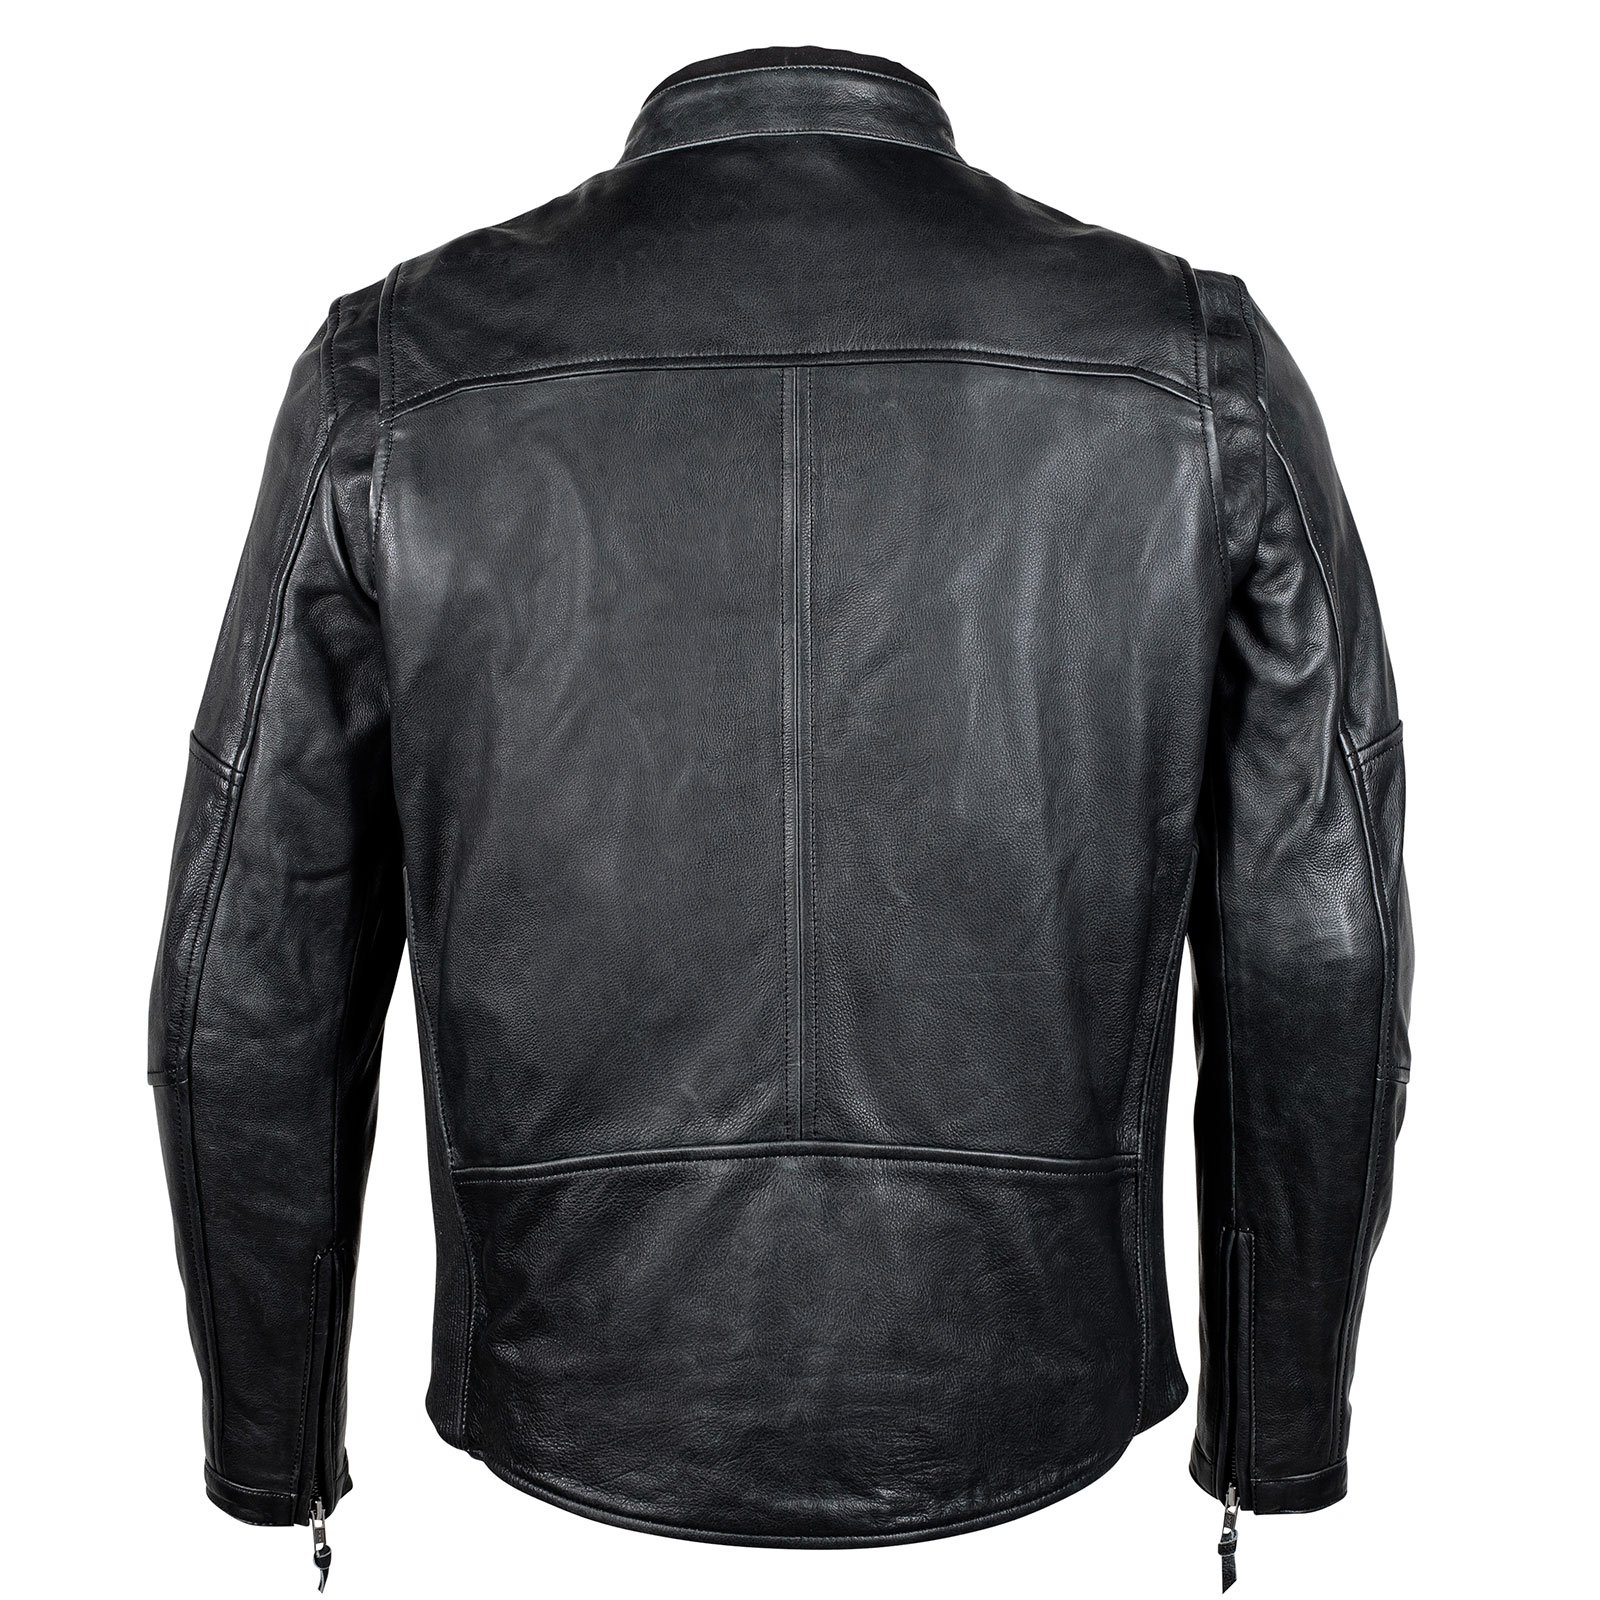 Cortech “The Idol” Jacket, Black – Baxter Cycle